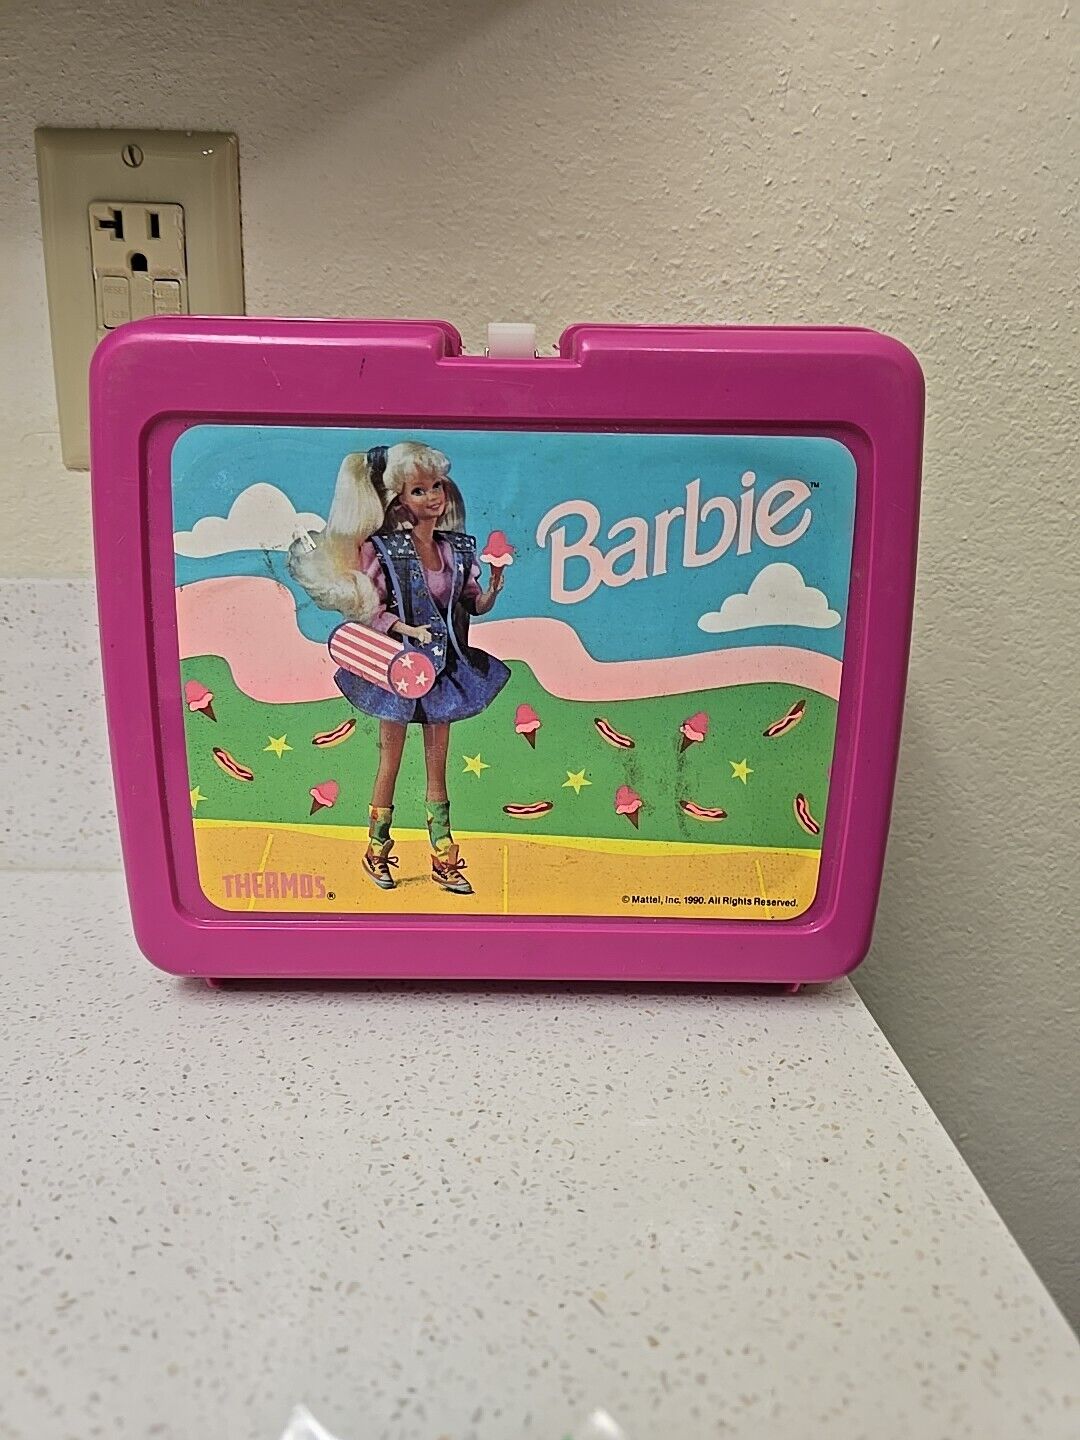 Vintage Barbie Plastic Lunch Box No Thermos Mattel GUC